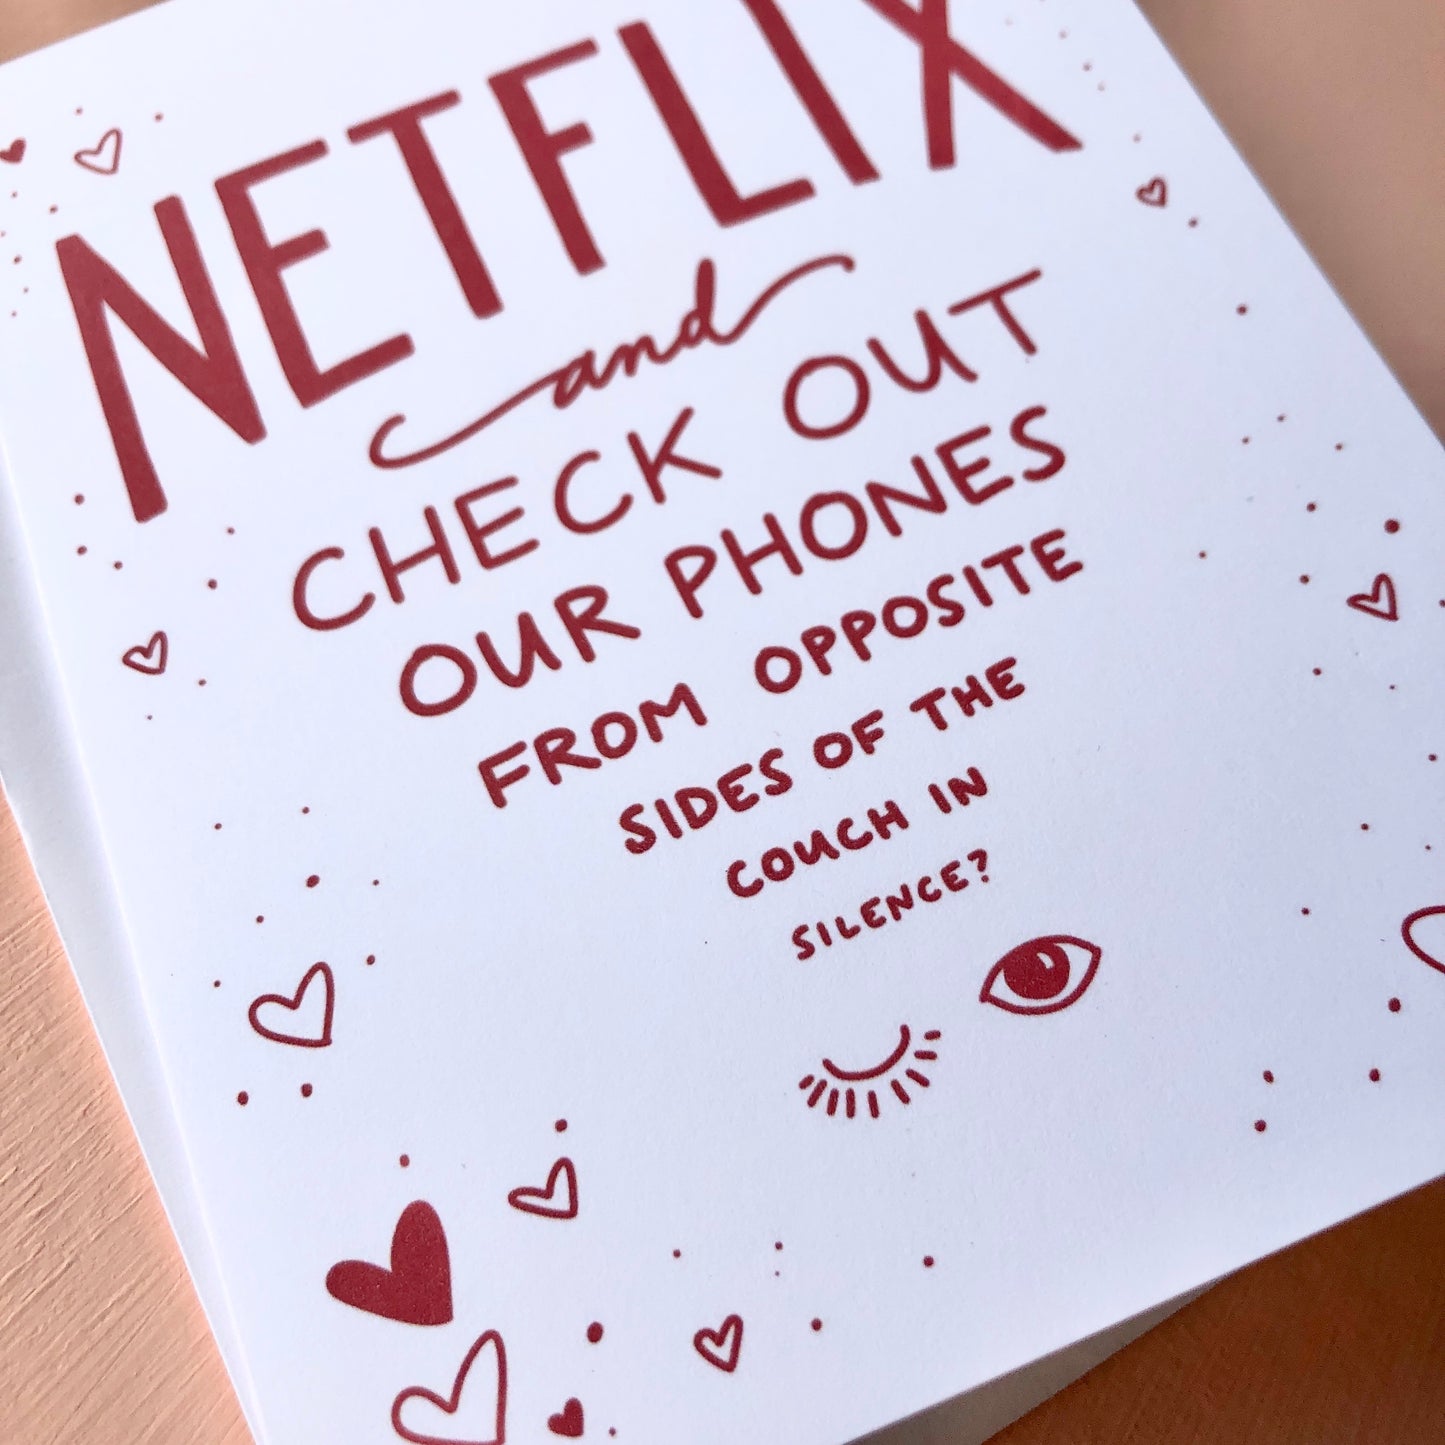 Netflix and Phones